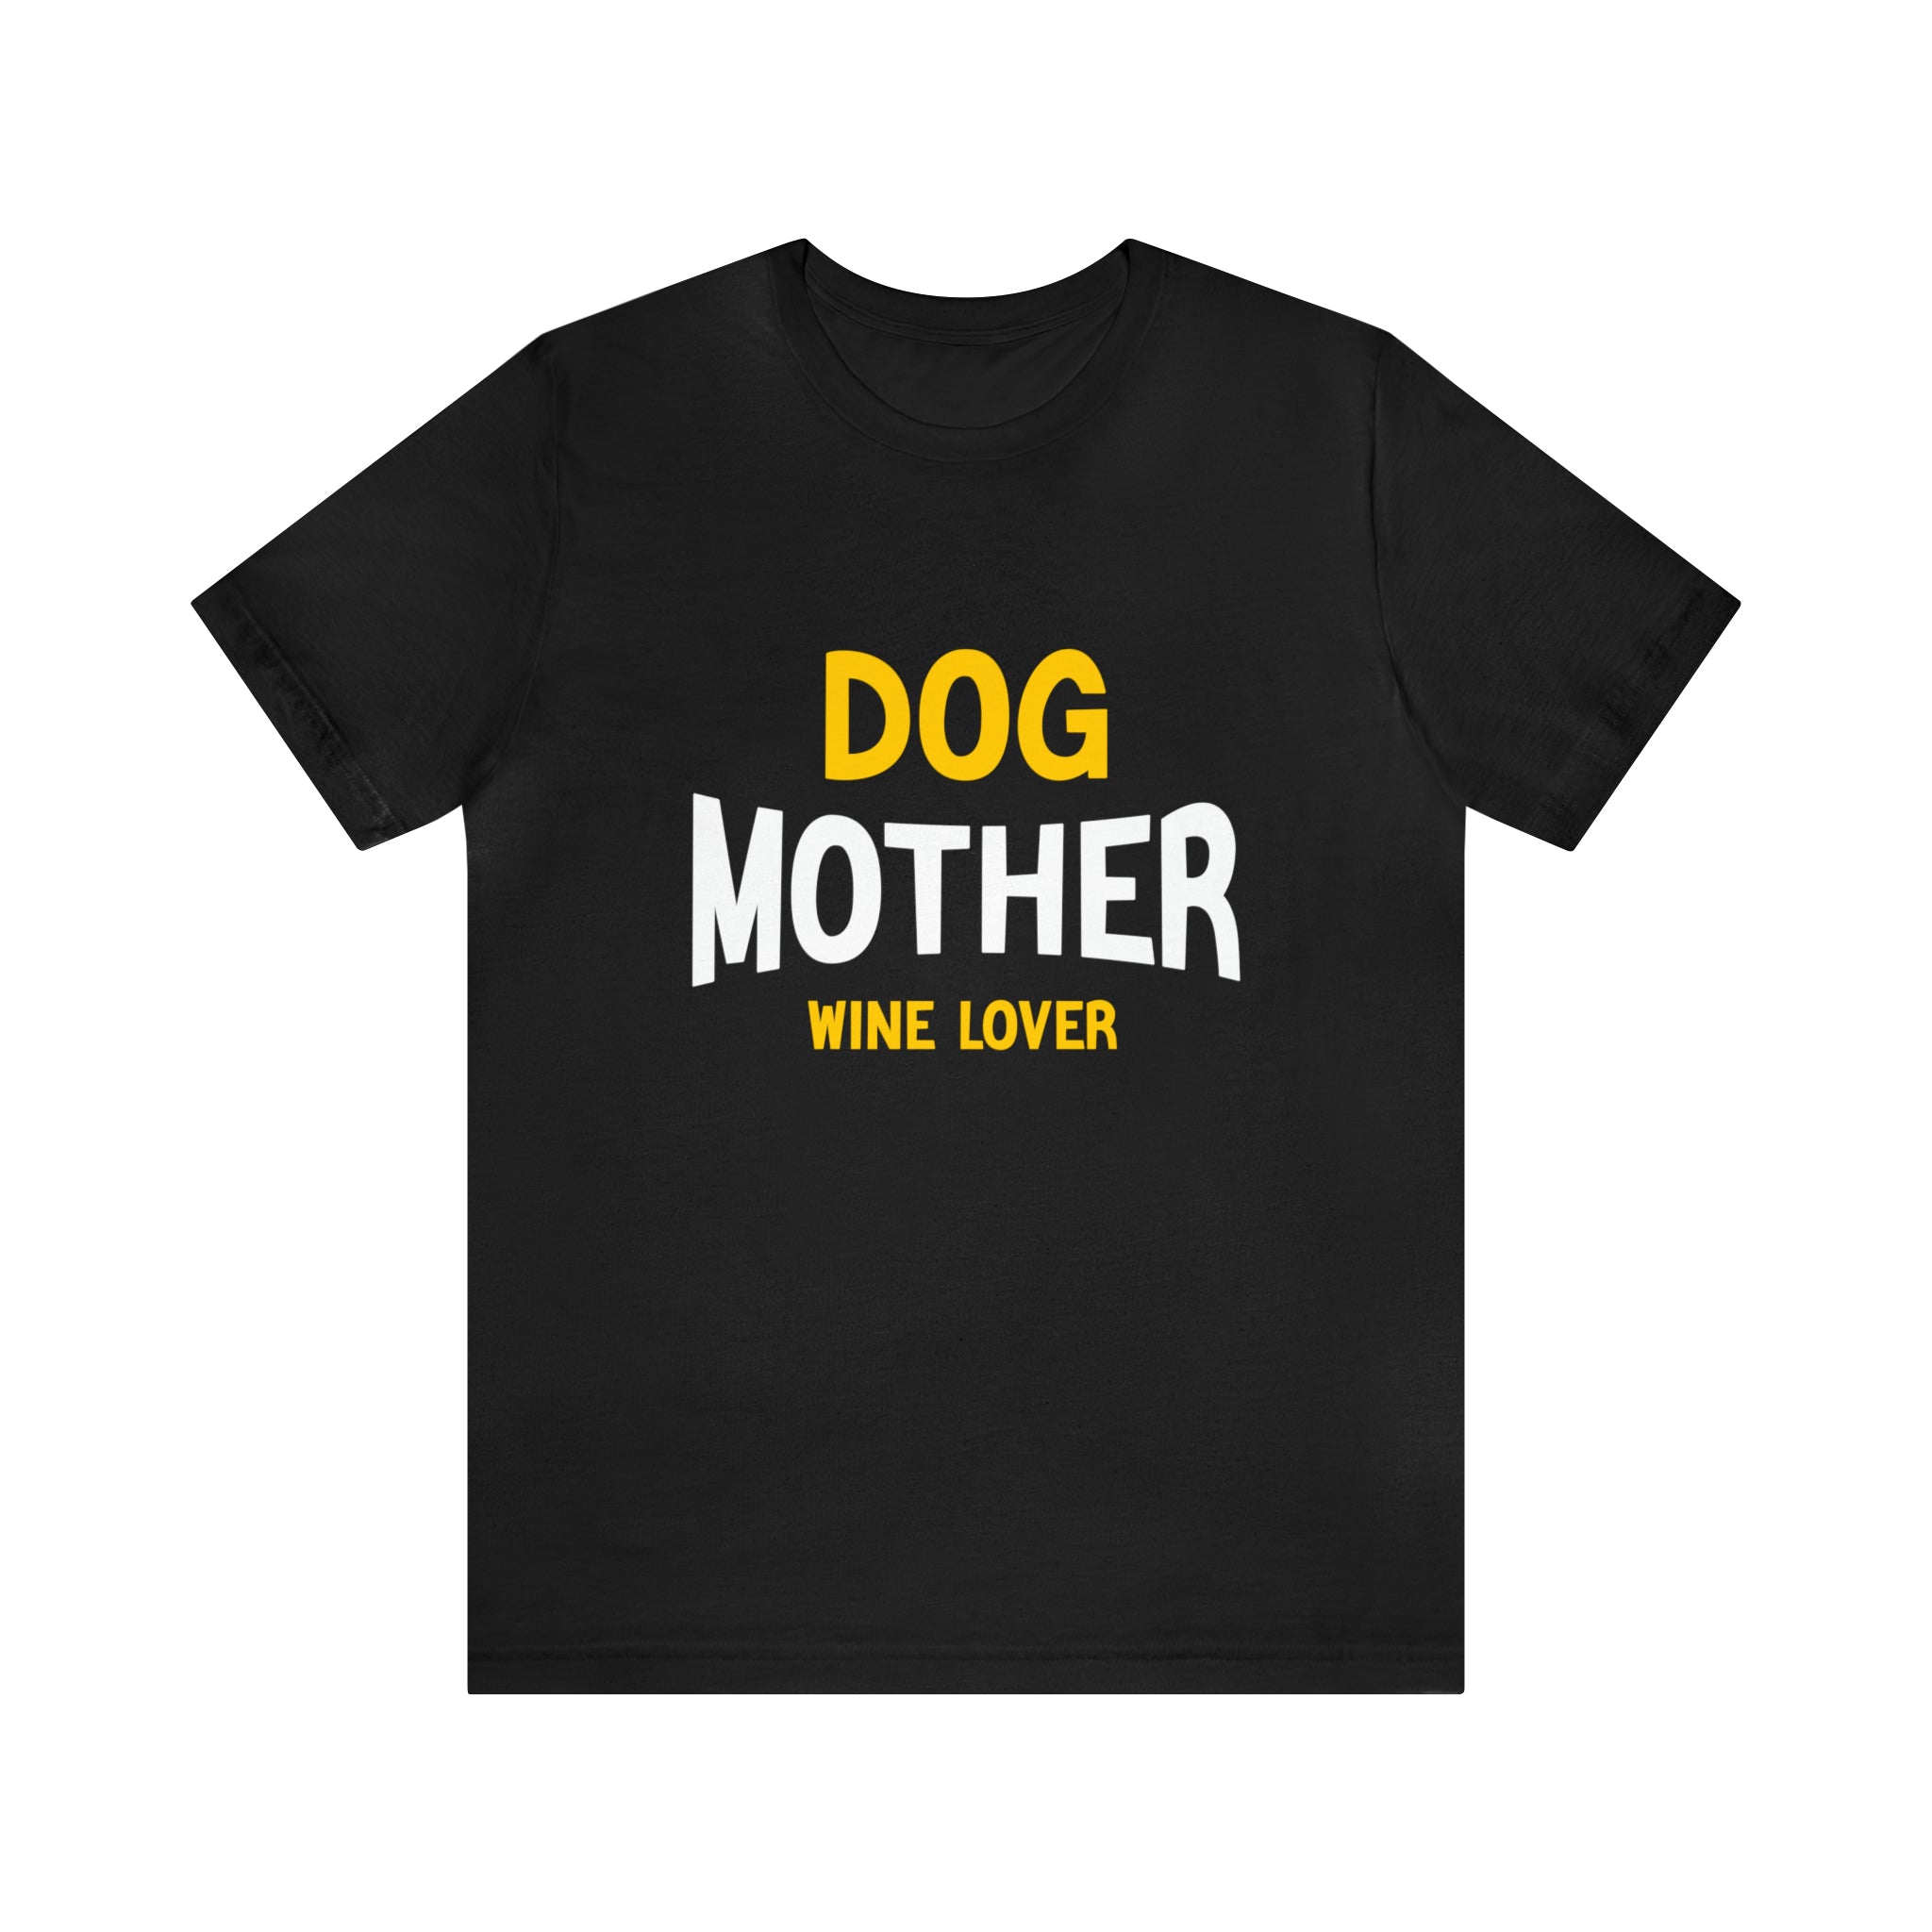 Dog Mother Wine Lover T-Shirt.